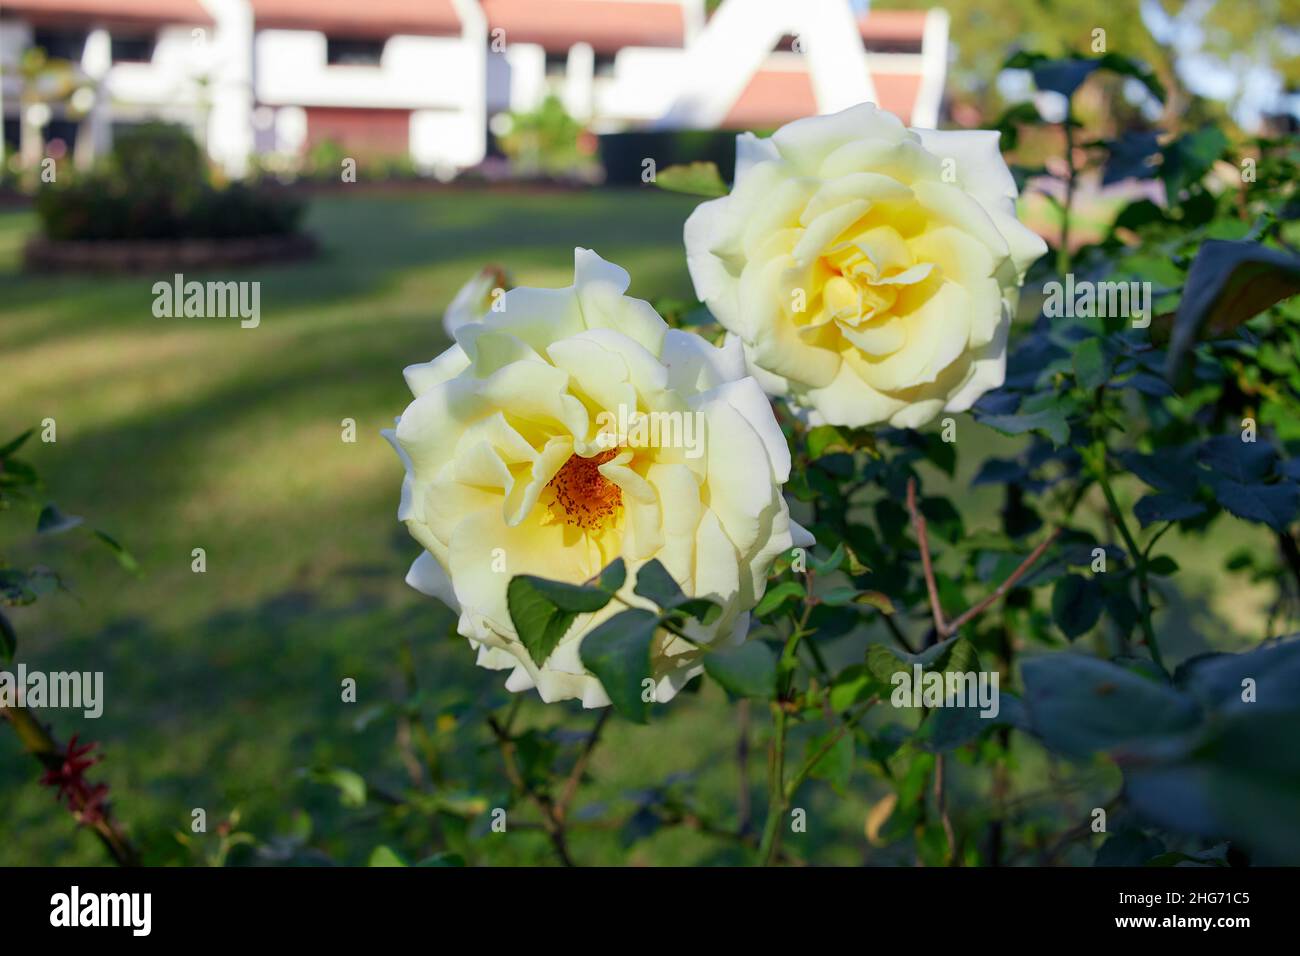 Fresh white rose flower blooming in a garden Stock Photo